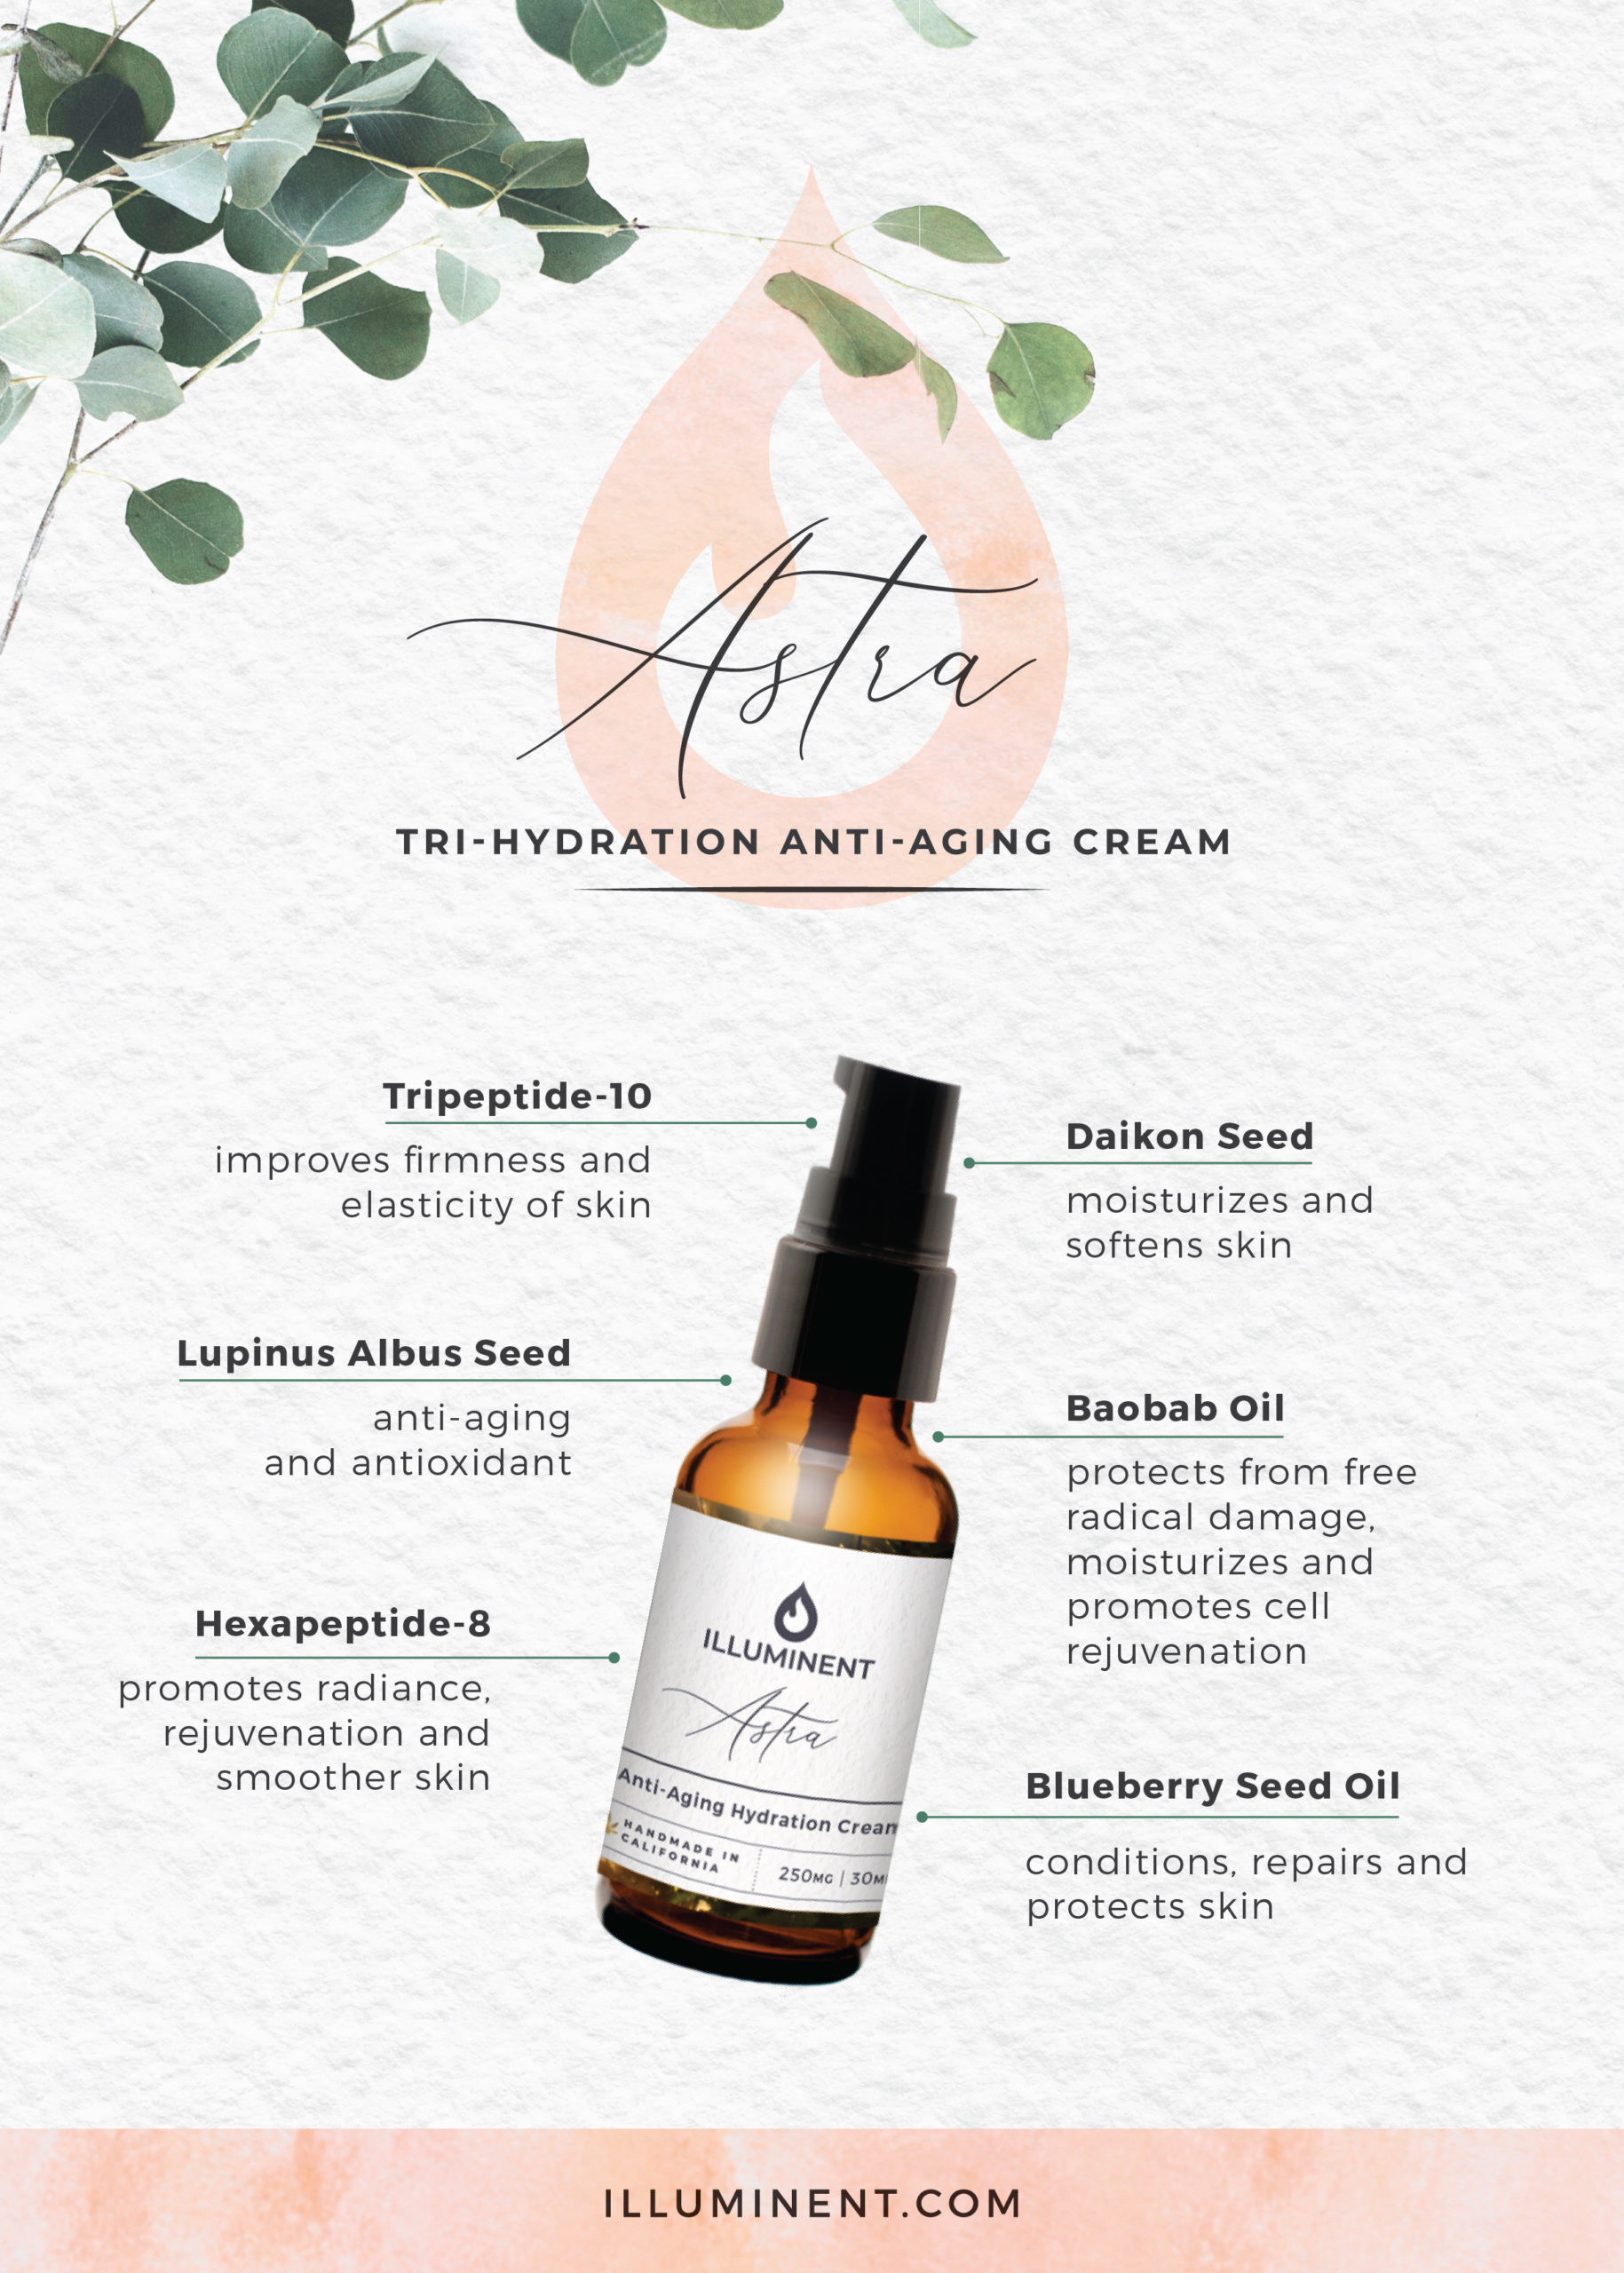 Astra Tri-Hydration Cream infographic